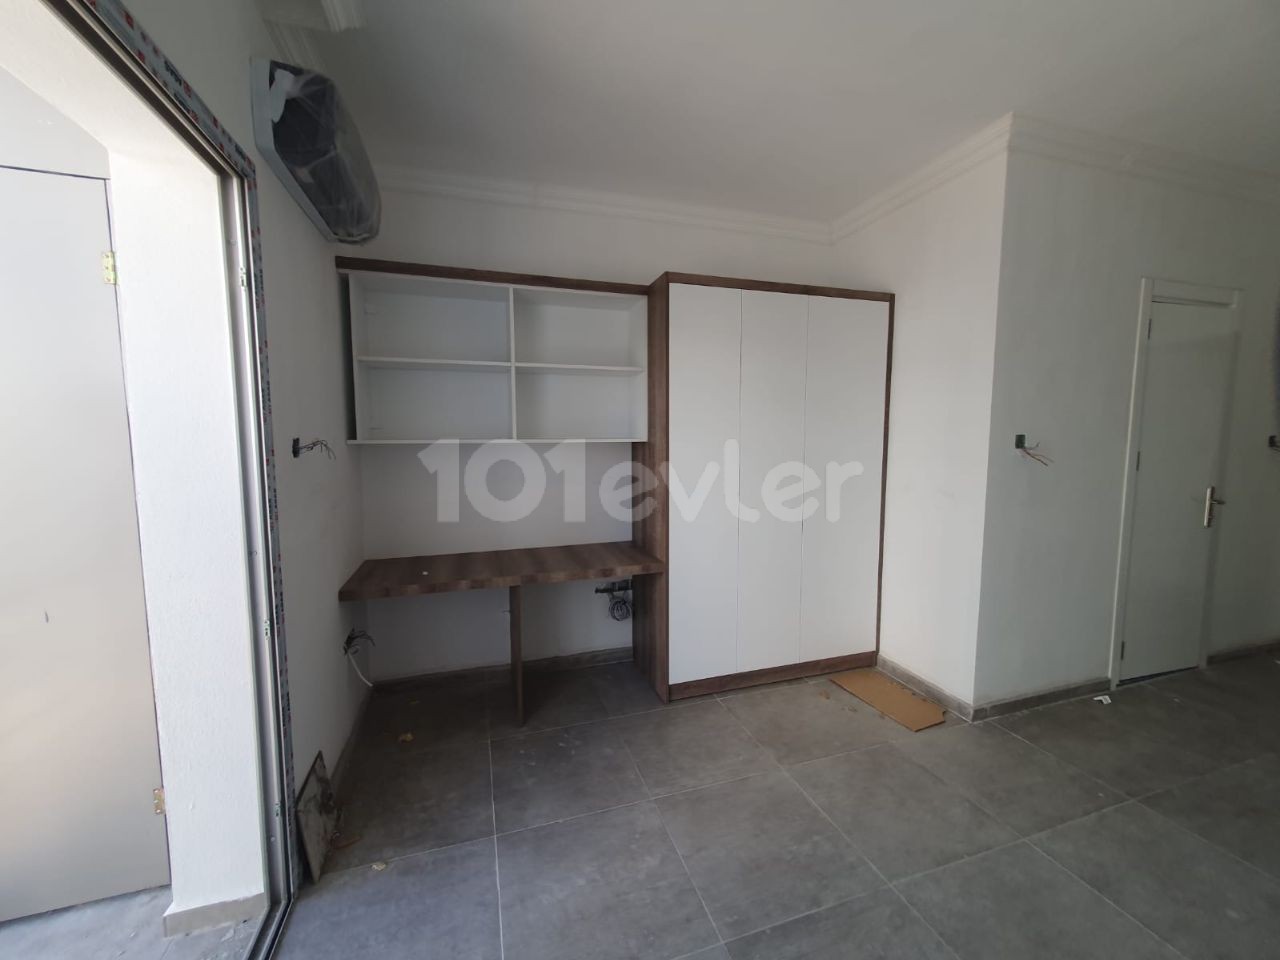 Dormitory for Rent in Kyrenia Center